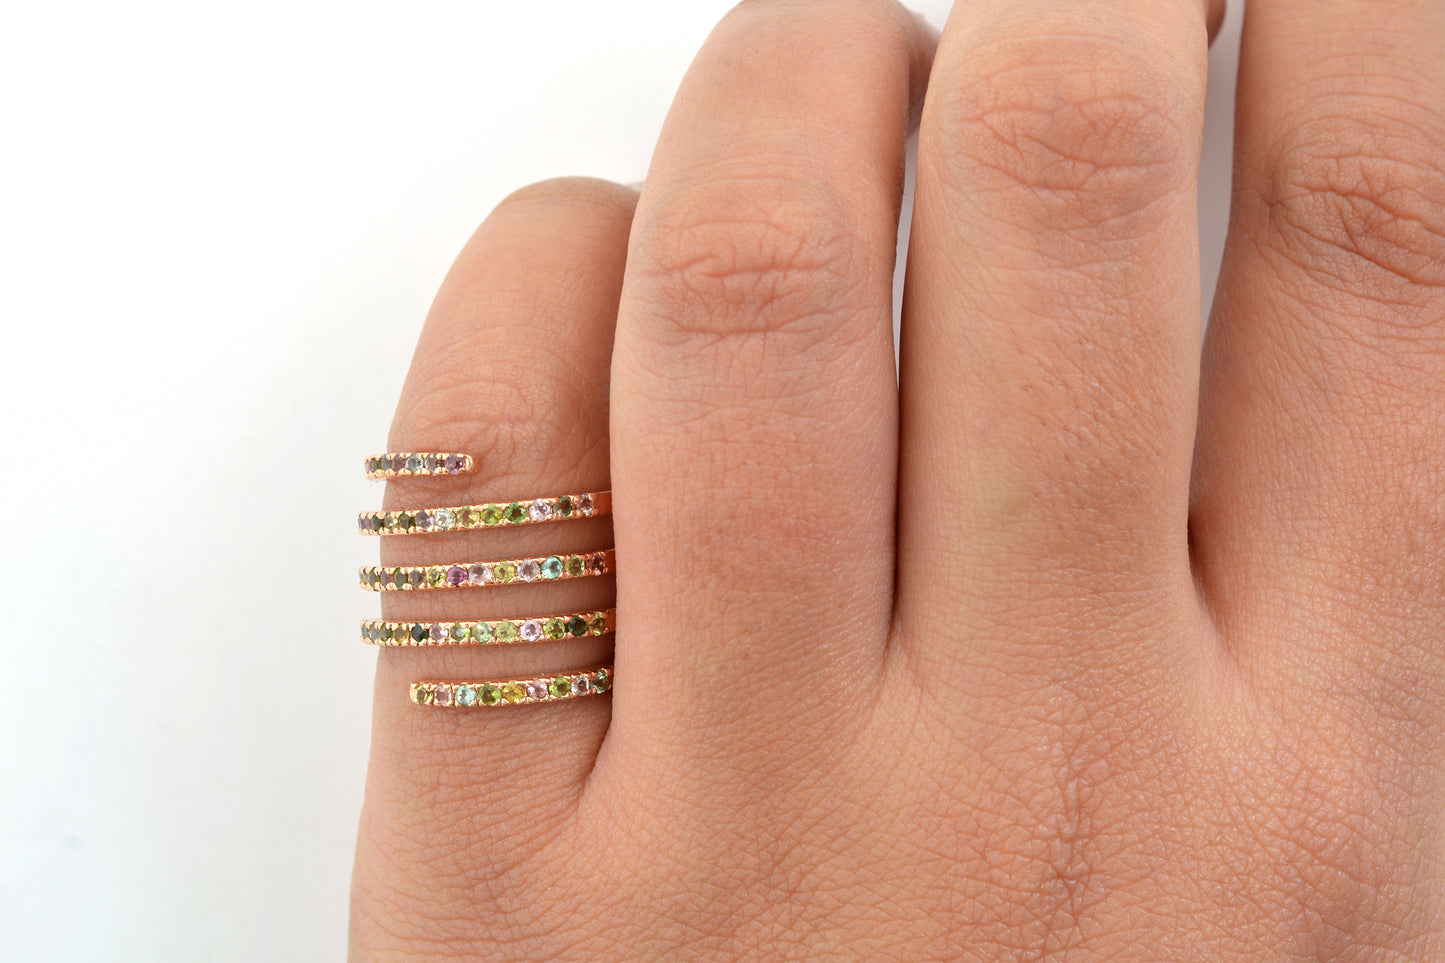 Stunning Spiral Ring With Genuine Multi-Tourmaline Hallmarked 14k Rose Gold Wedding Ring